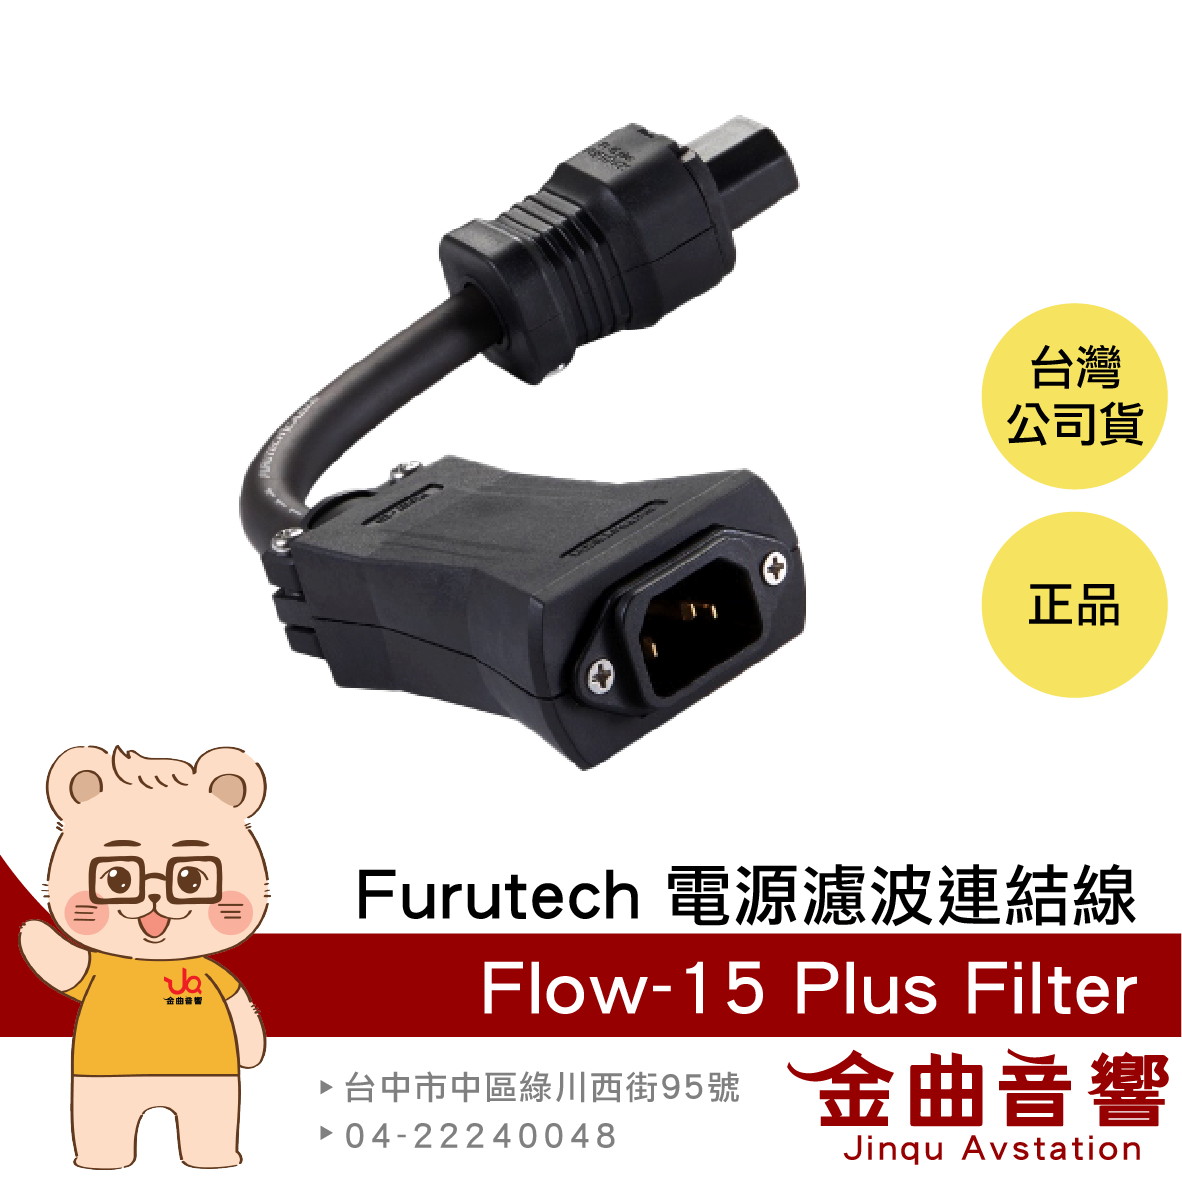 FURUTECH 古河 Flow-15 Plus Filter 電源濾波升級連接線 | 金曲音響